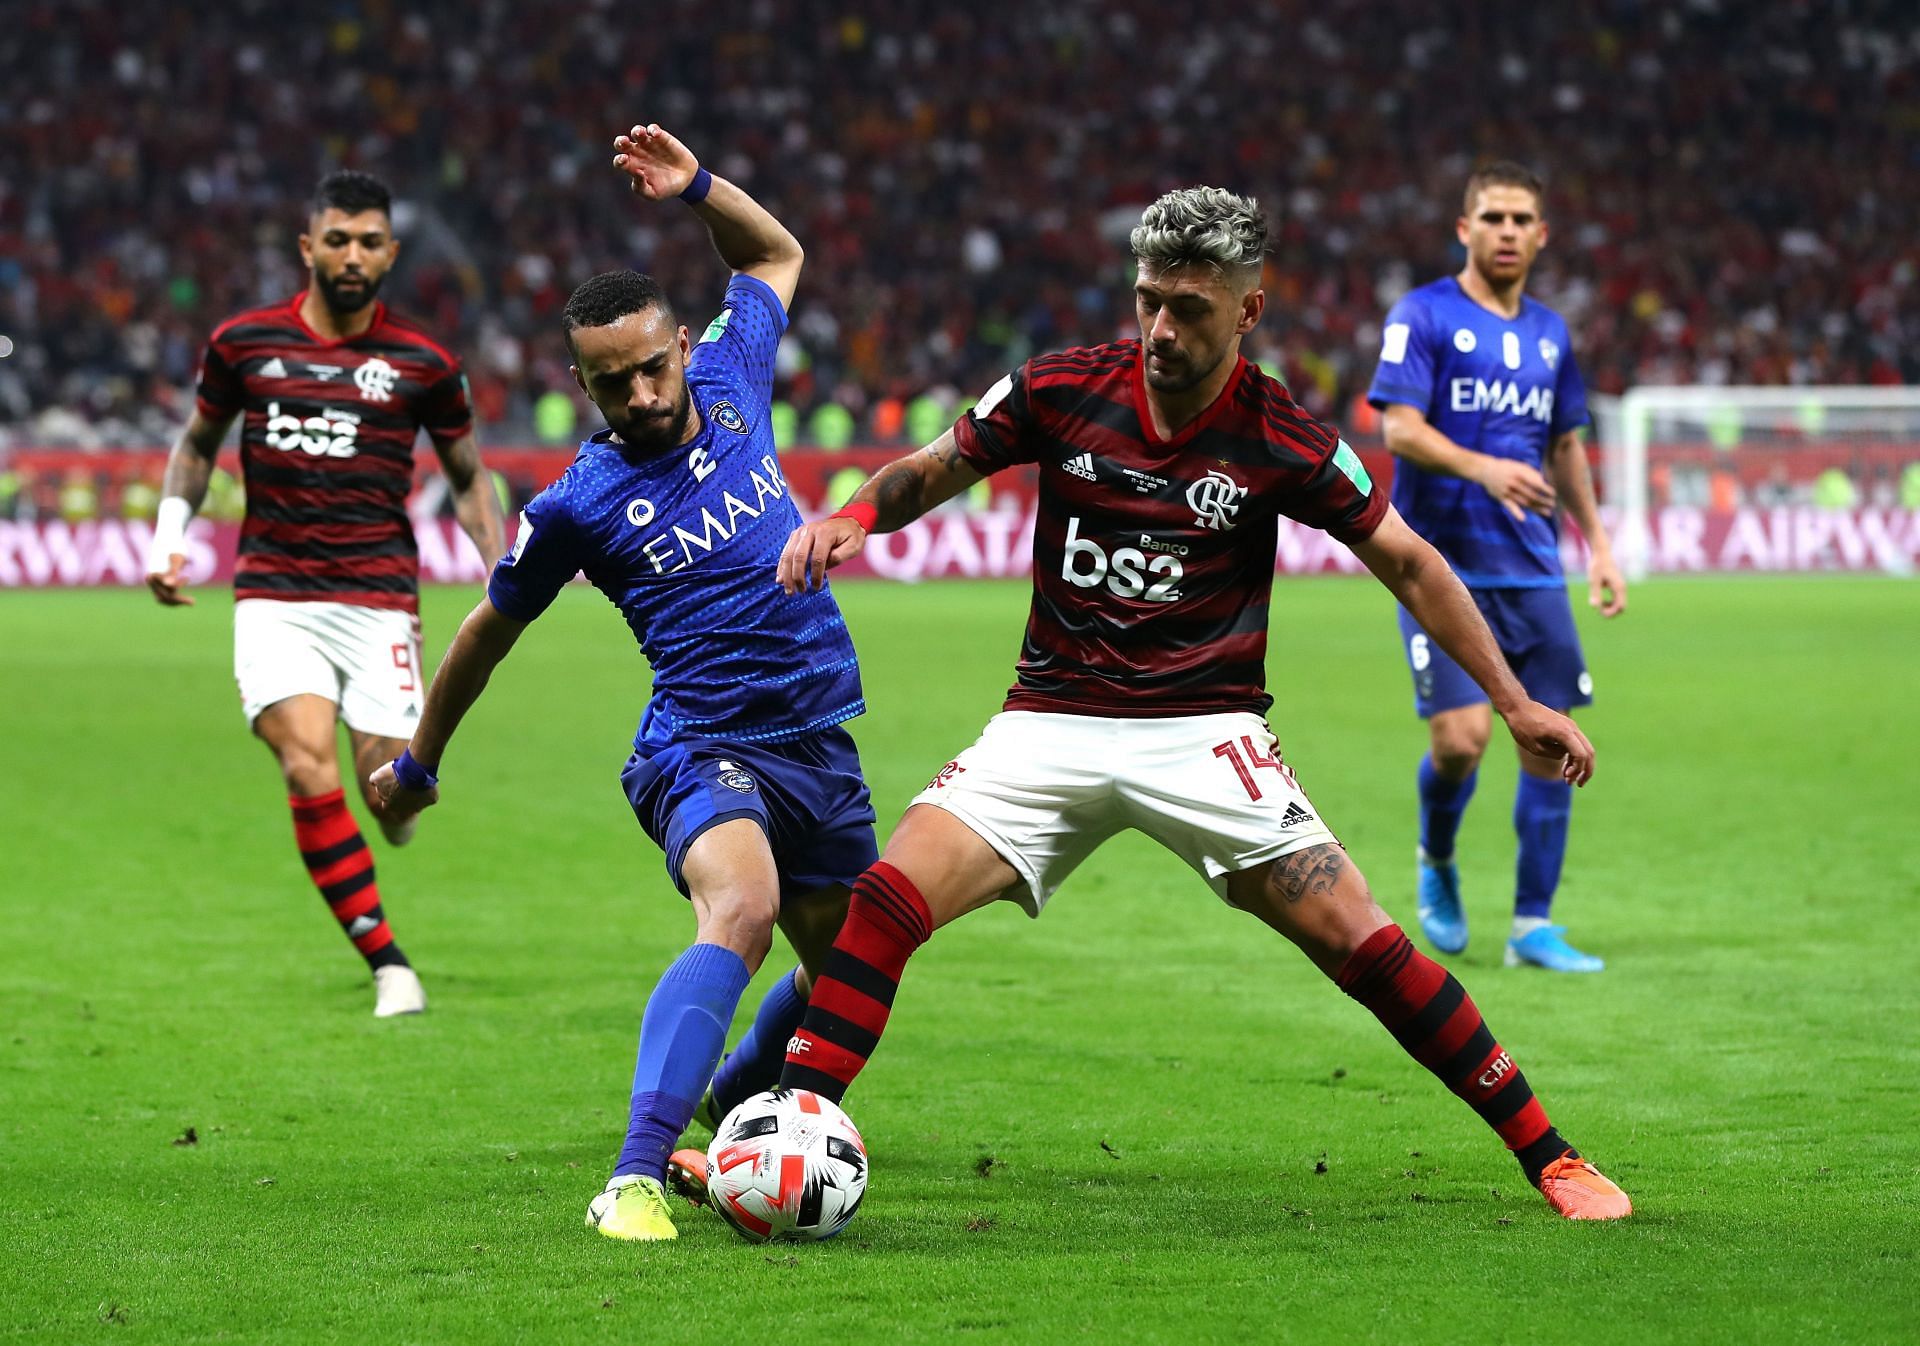 Telleres de Cardoba and Flamengo face off on Wednesday